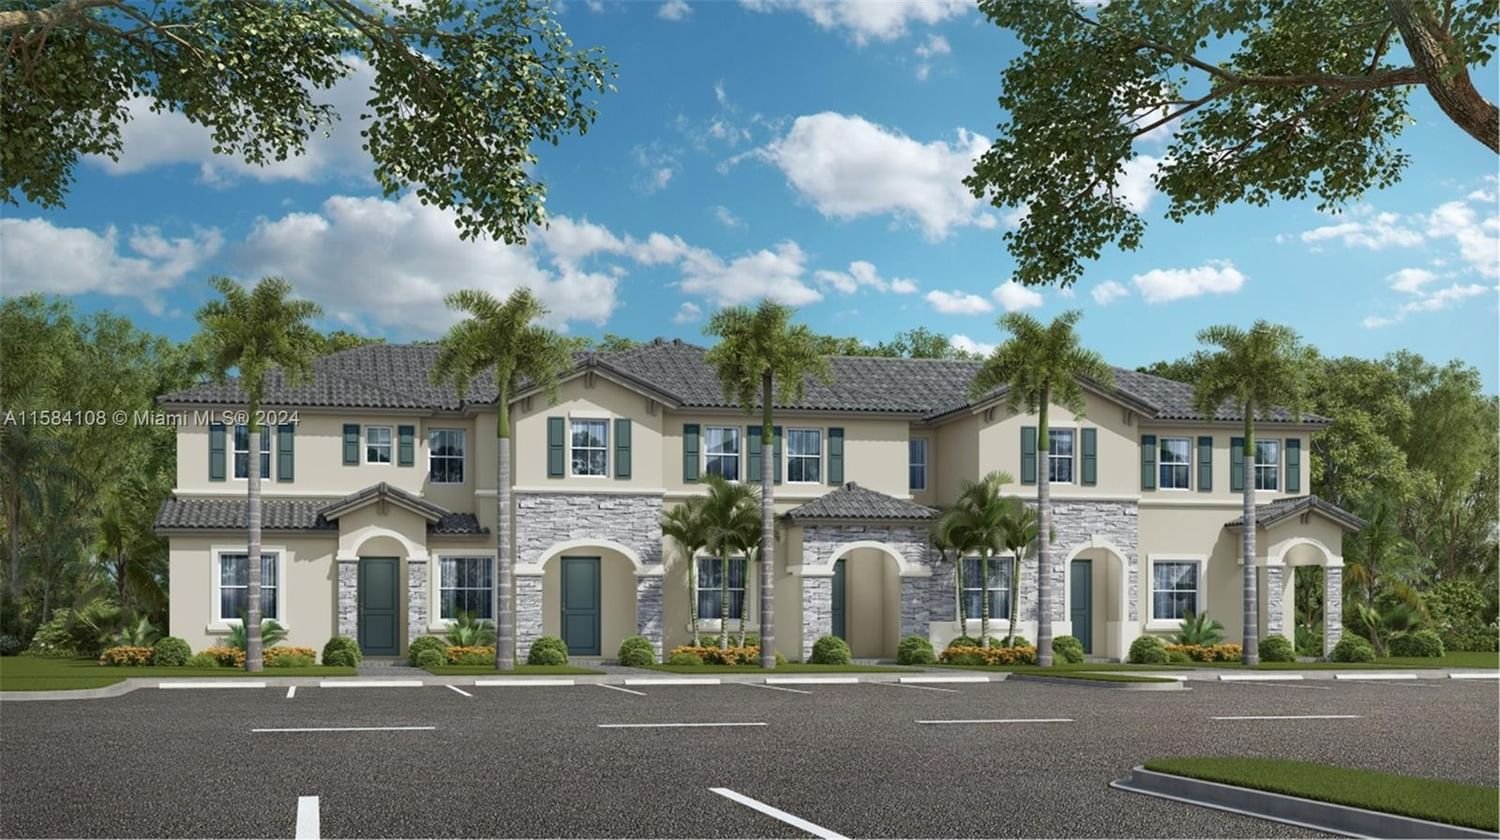 Real estate property located at 29255 163 CT, Miami-Dade County, Cedar Pointe, Homestead, FL